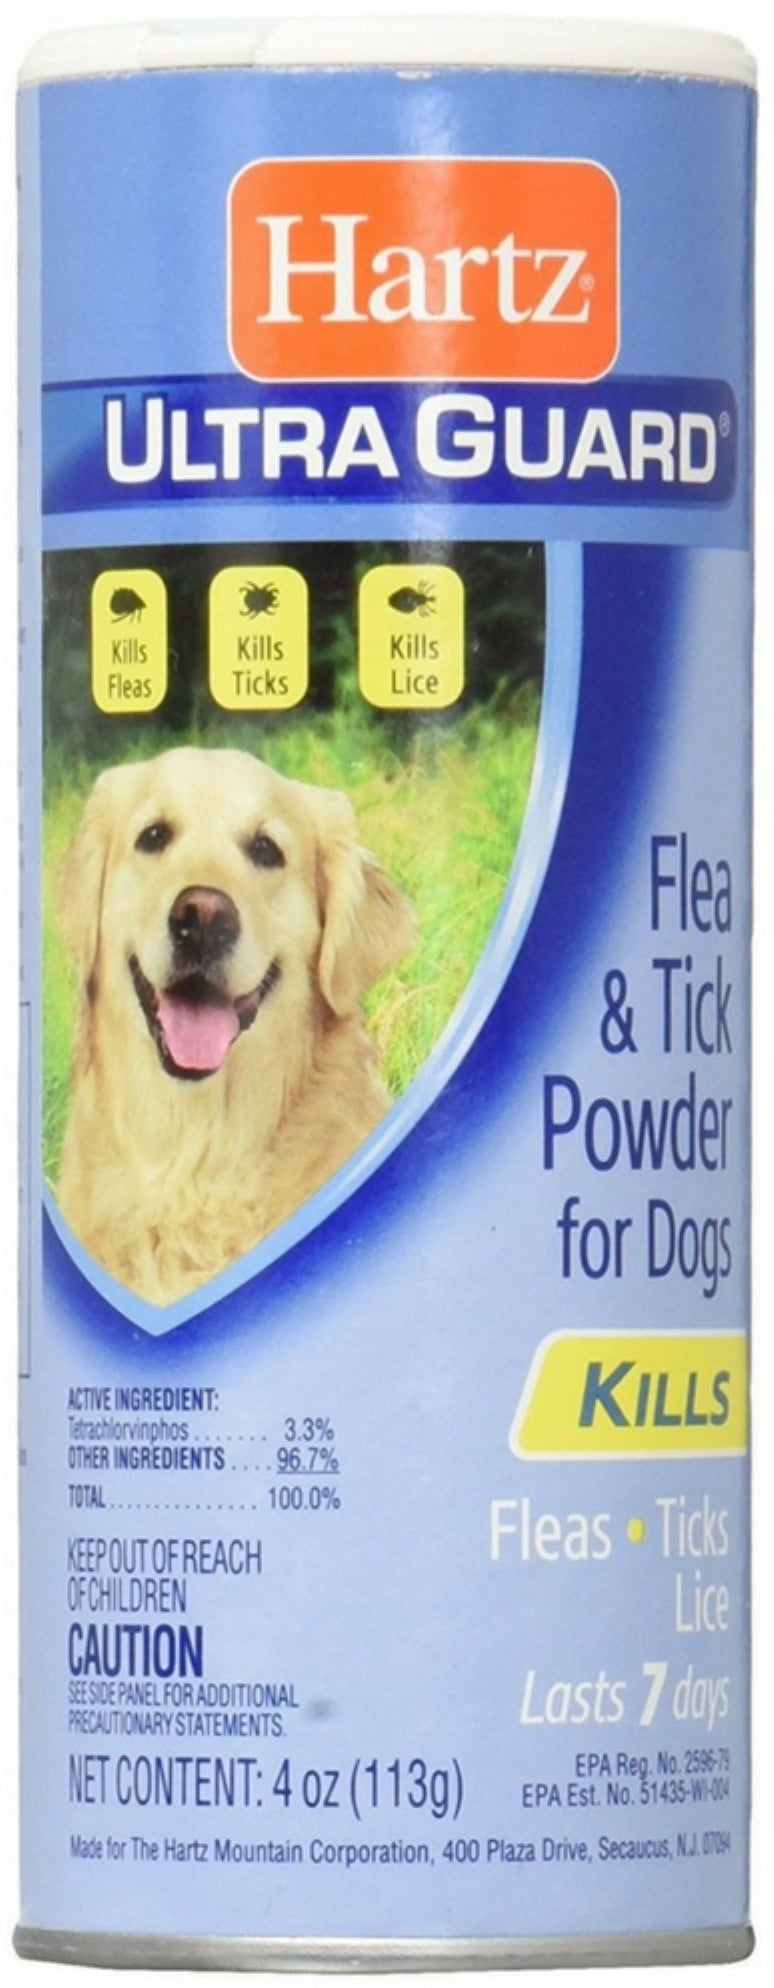 tick and flea powder